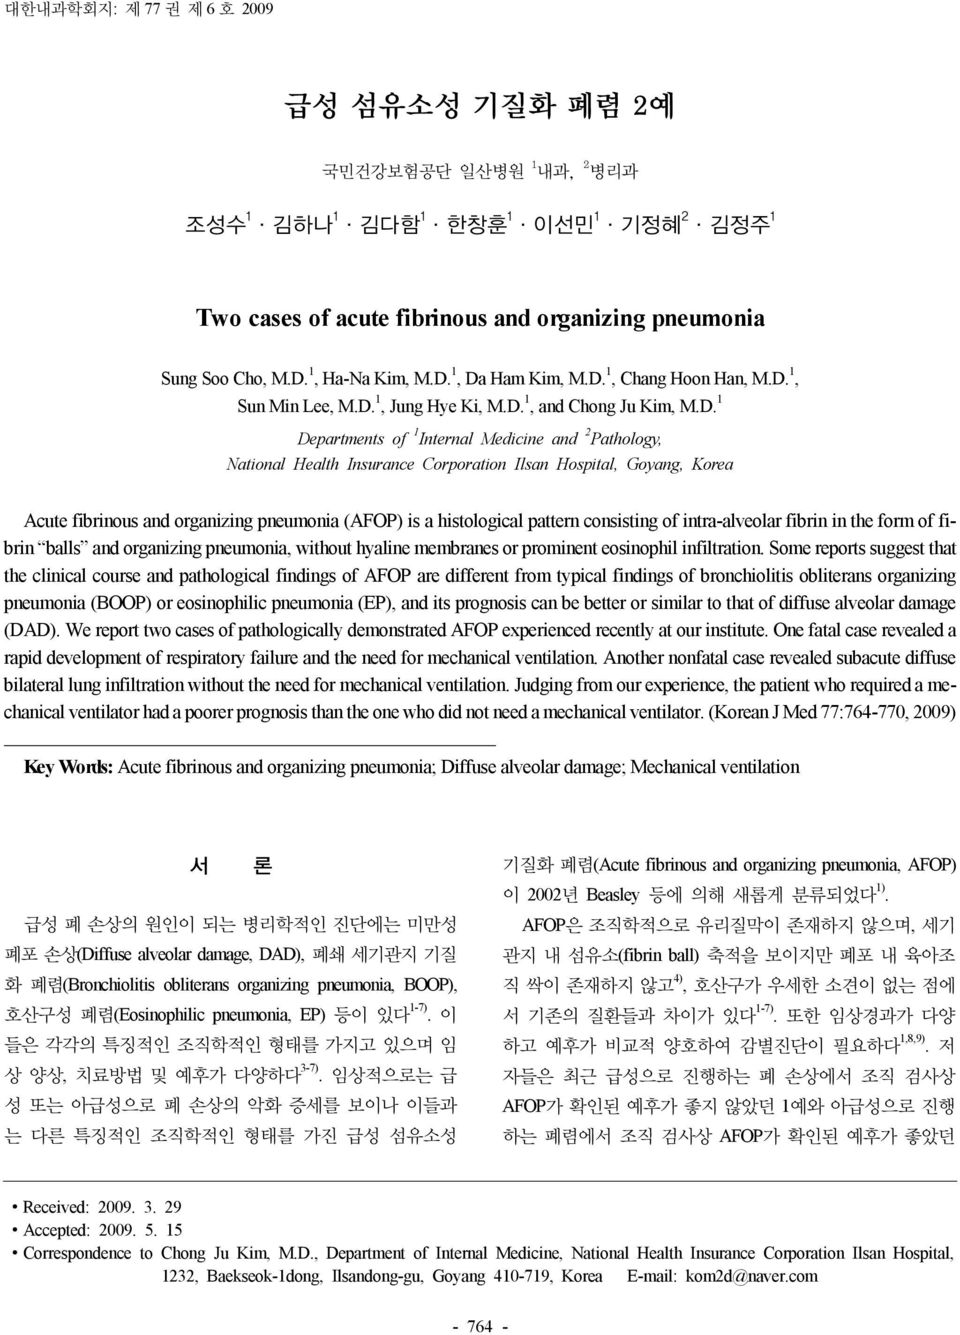 1, Da Ham Kim, M.D. 1, Chang Hoon Han, M.D. 1, Sun Min Lee, M.D. 1, Jung Hye Ki, M.D. 1, and Chong Ju Kim, M.D. 1 Departments of 1 Internal Medicine and 2 Pathology, National Health Insurance